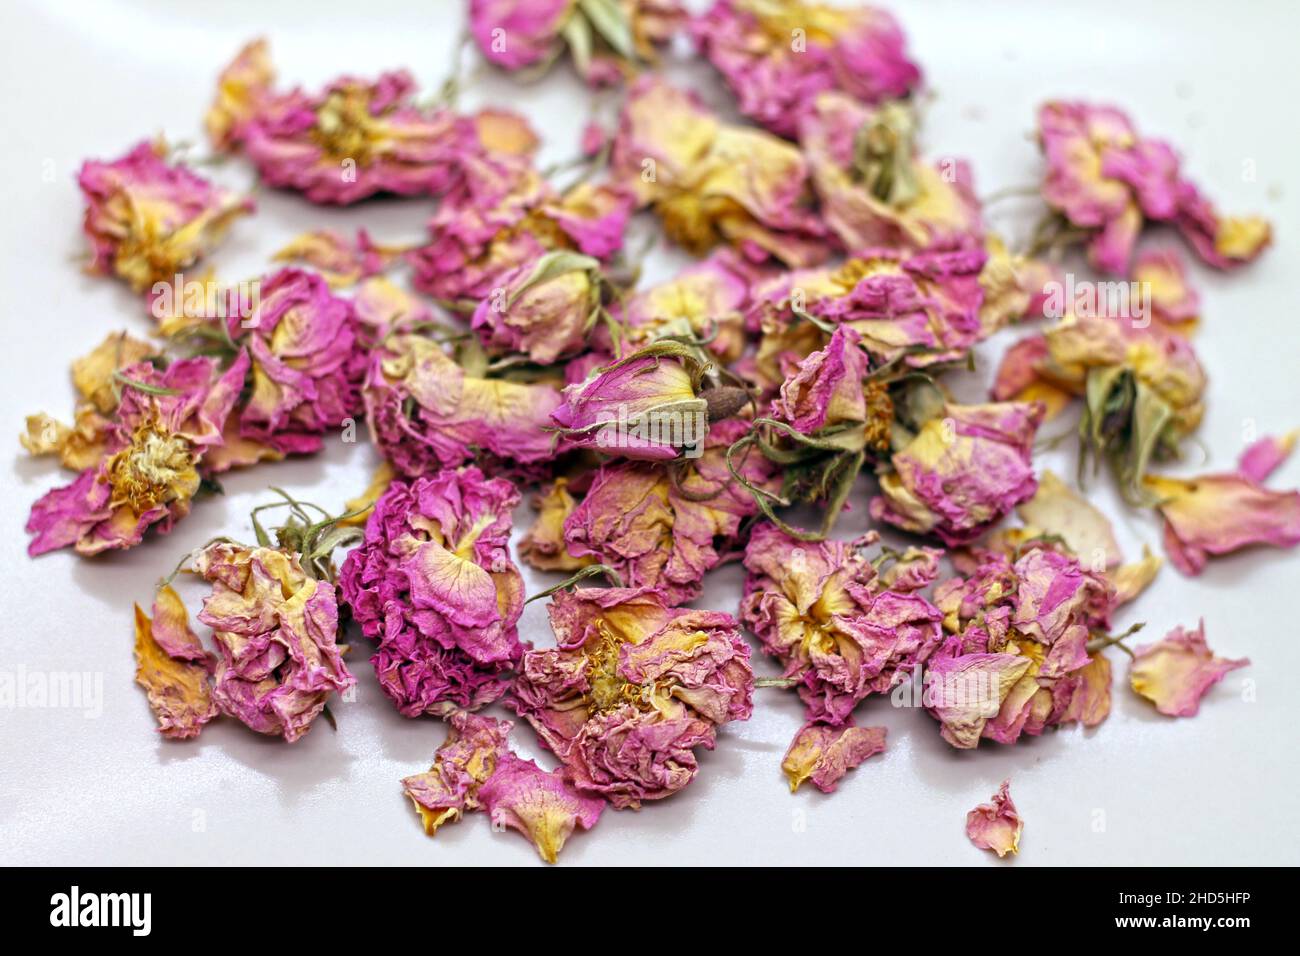 Dry rose buds tea on white background. Selektive focus. Stock Photo